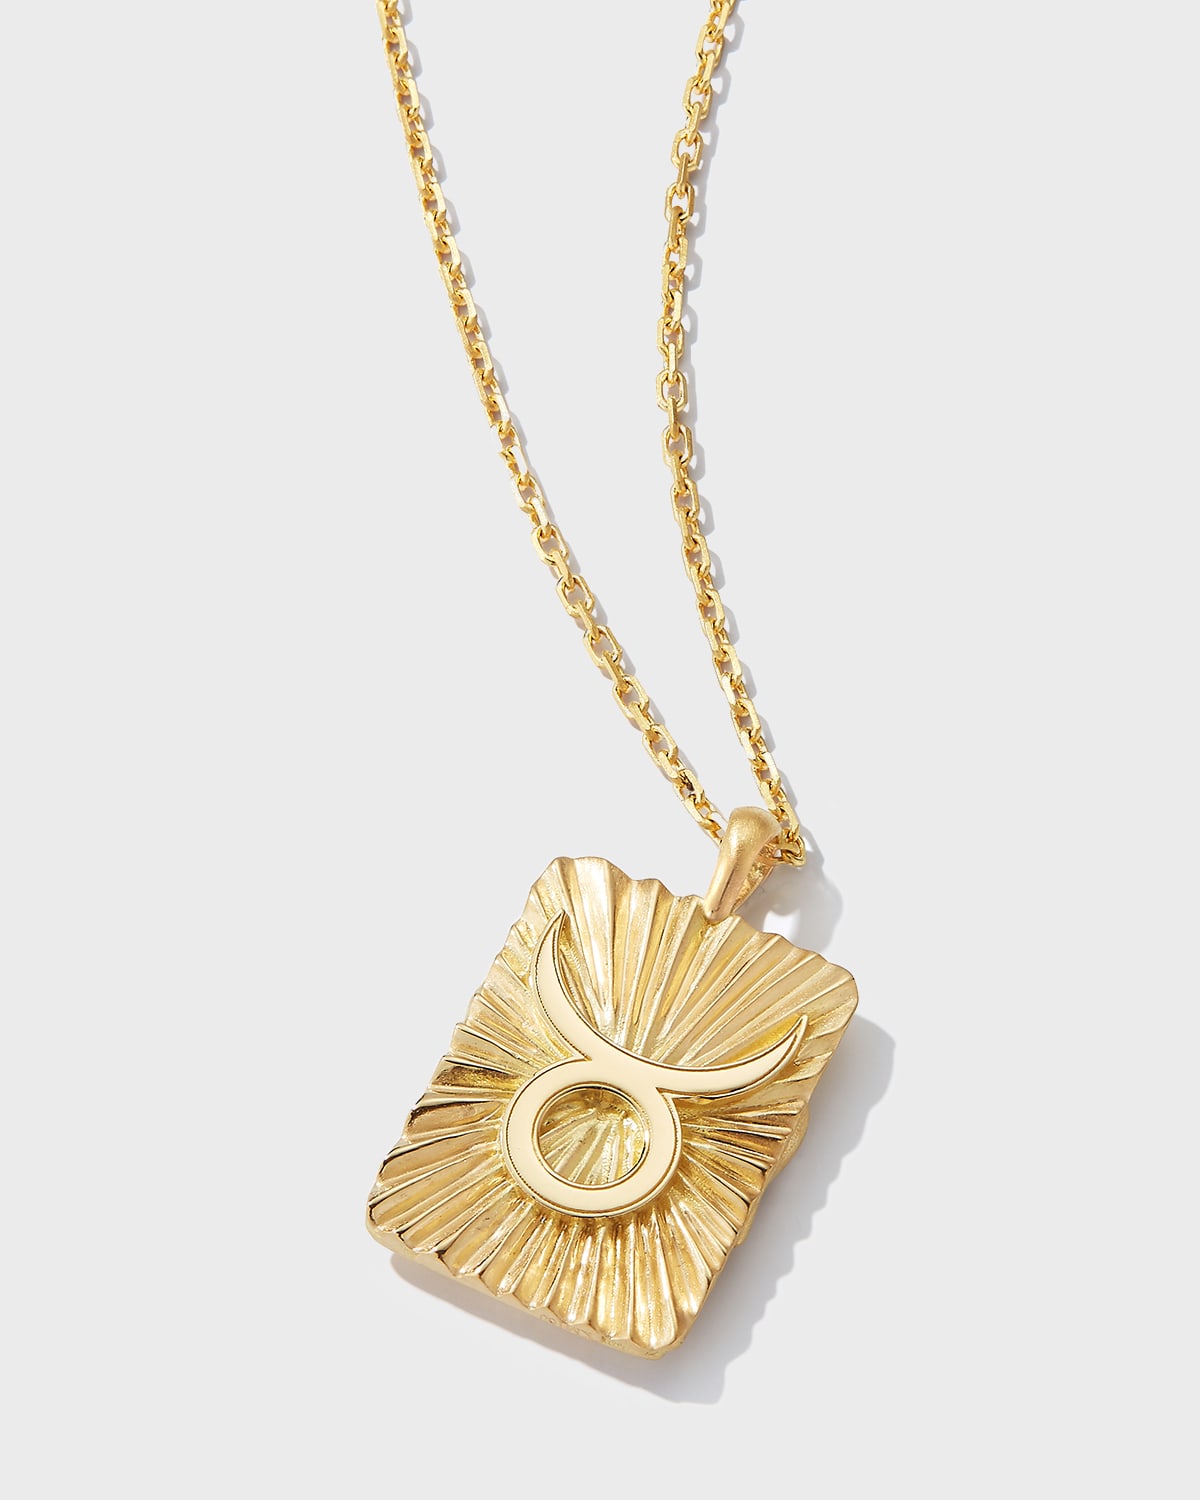 Taurus Zodiac Pendant Necklace in 18k Gold & Platinum with Diamonds